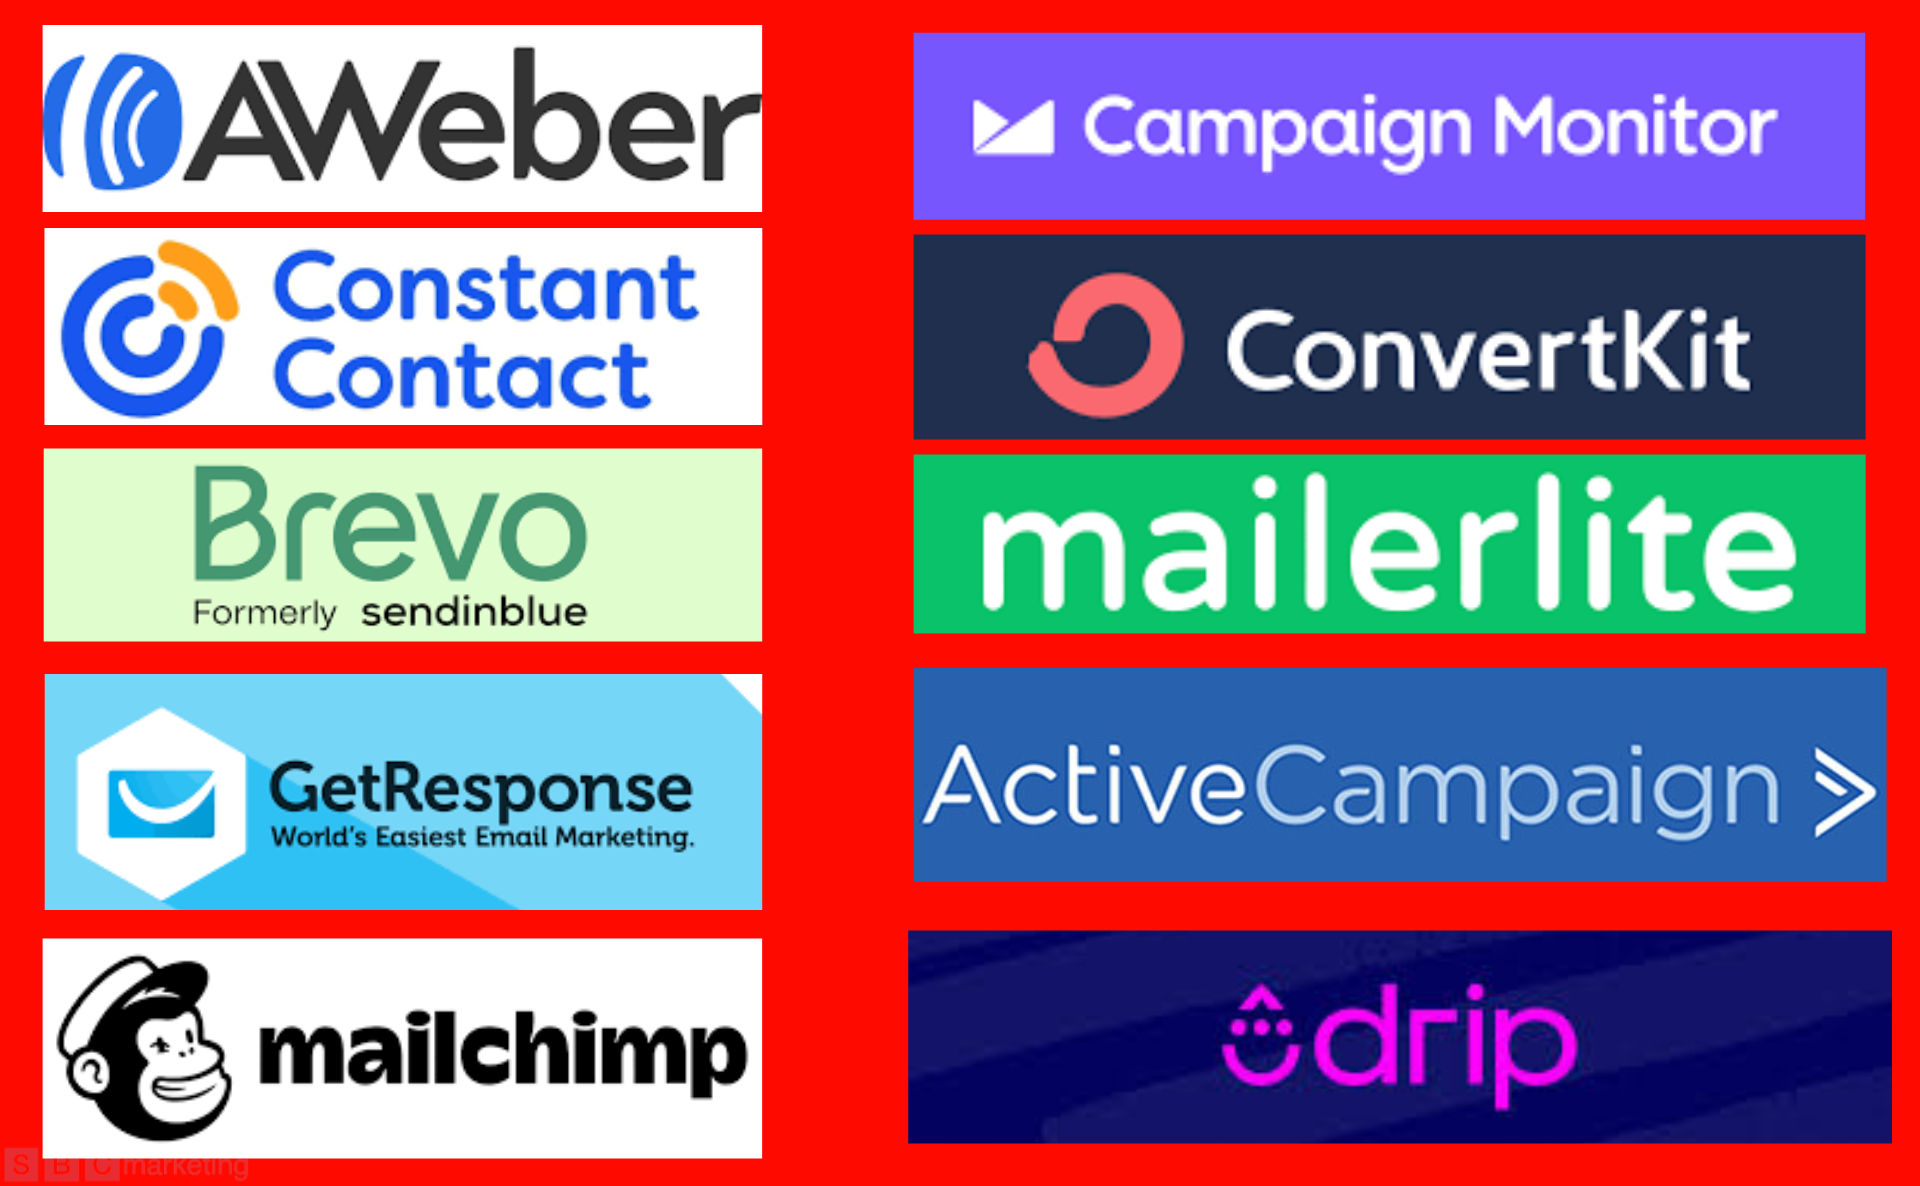 email marketing platforms